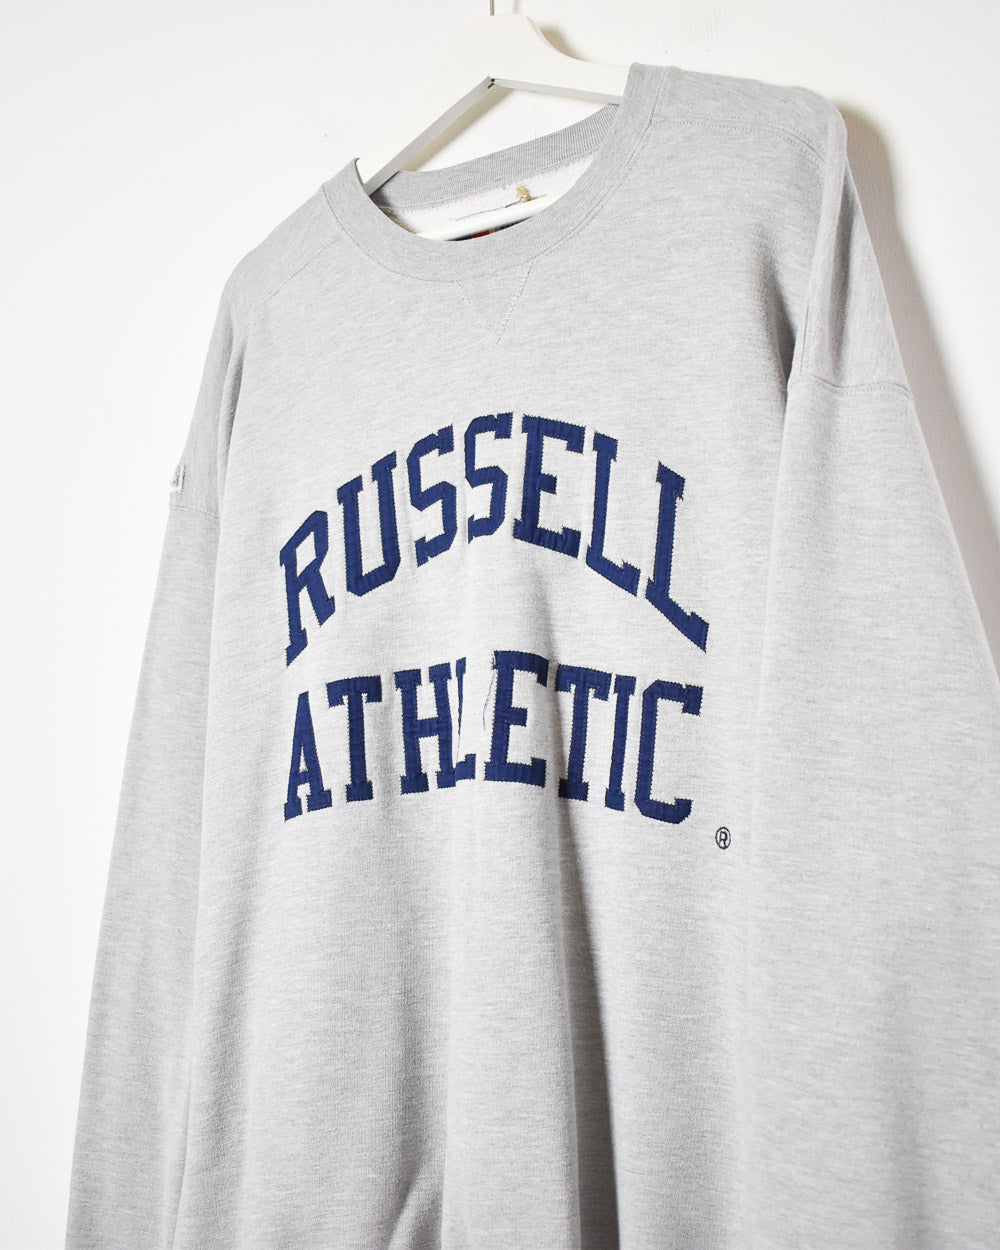 Stone Russell Athletic Sweatshirt - X-Large